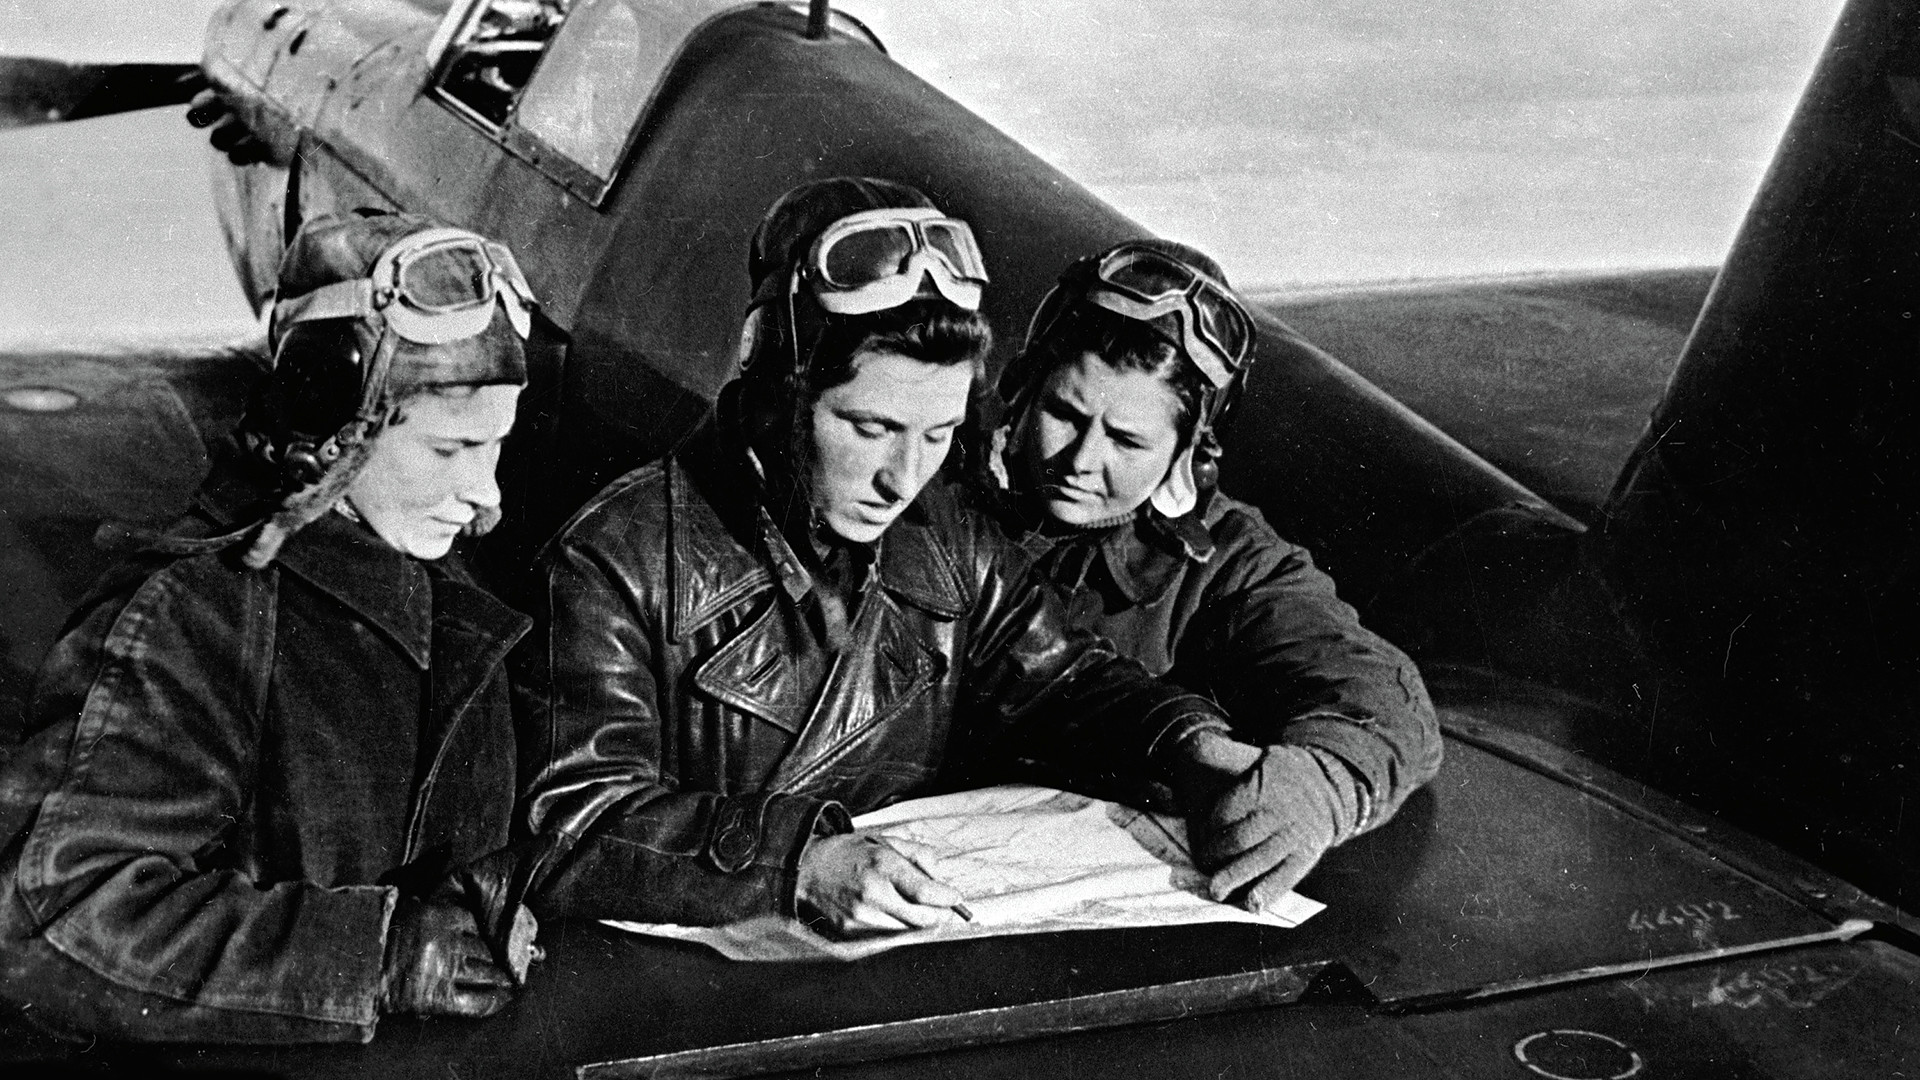 Donne pilota del 586esimo reggimento. Da sinistra a destra: Litvjak, Budanova e Kuznetsova